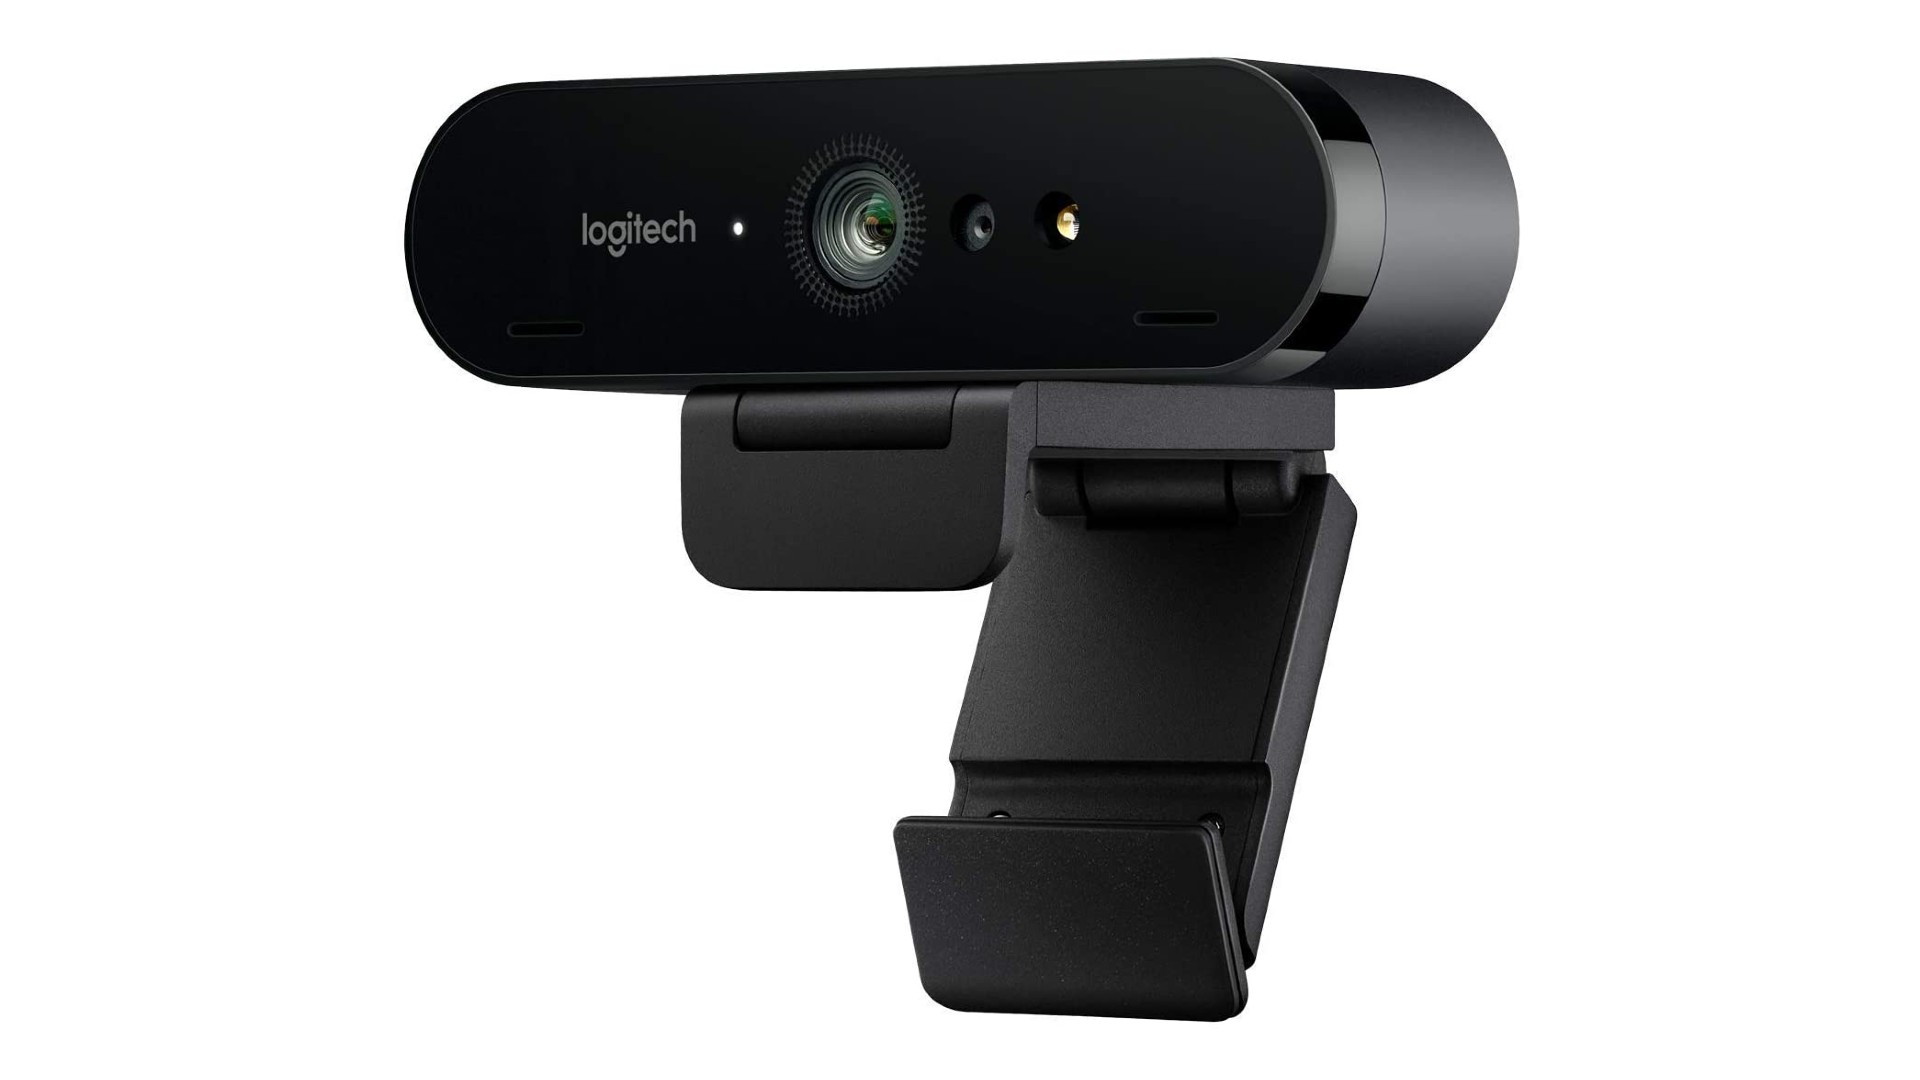 The best 4K webcam is Logitech Brio